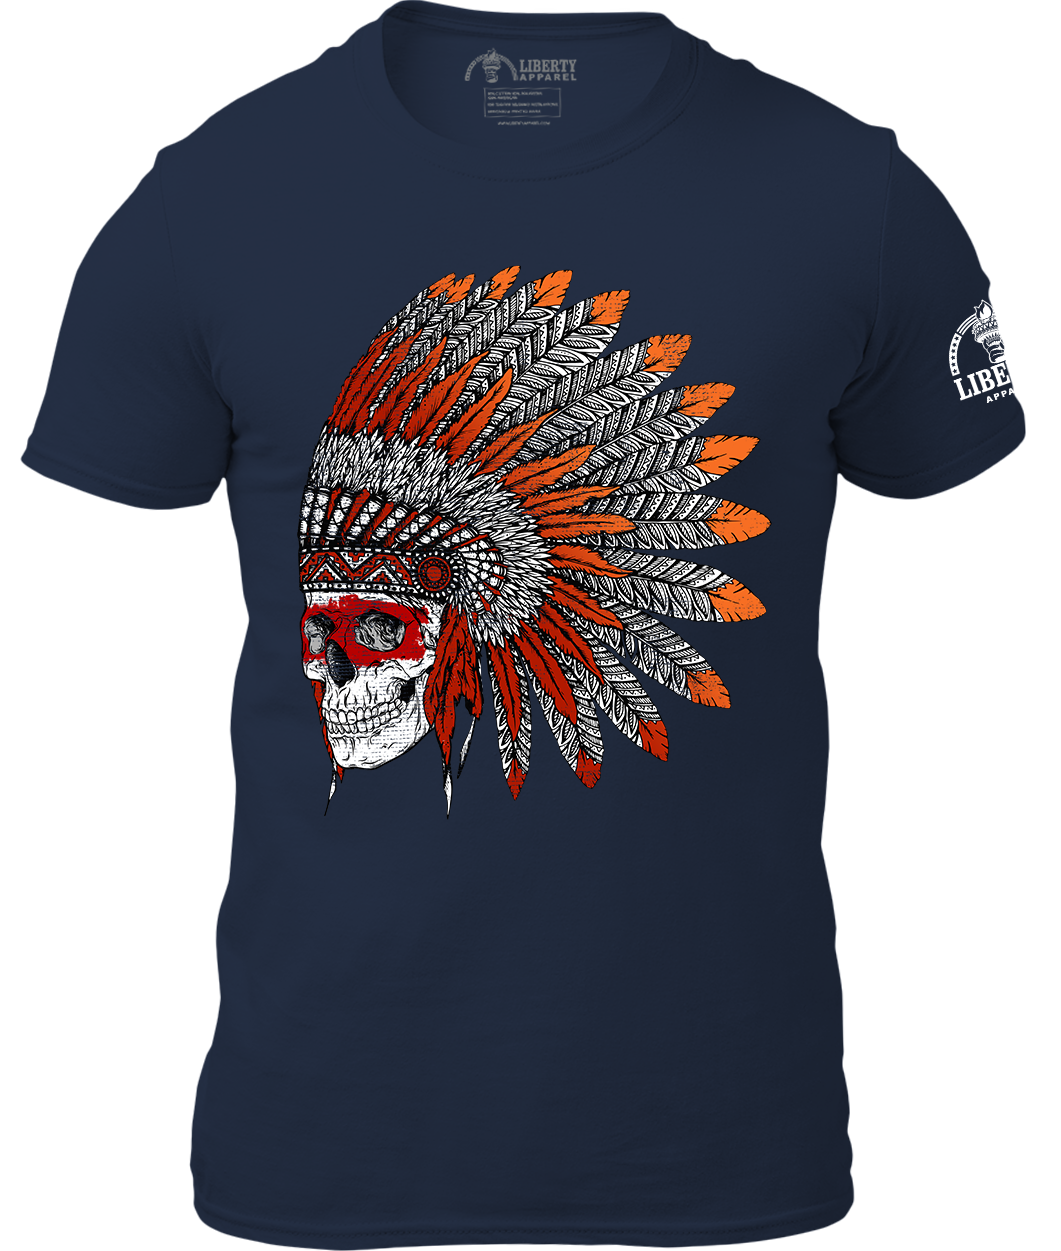 Native American Headdress - Liberty Apparel